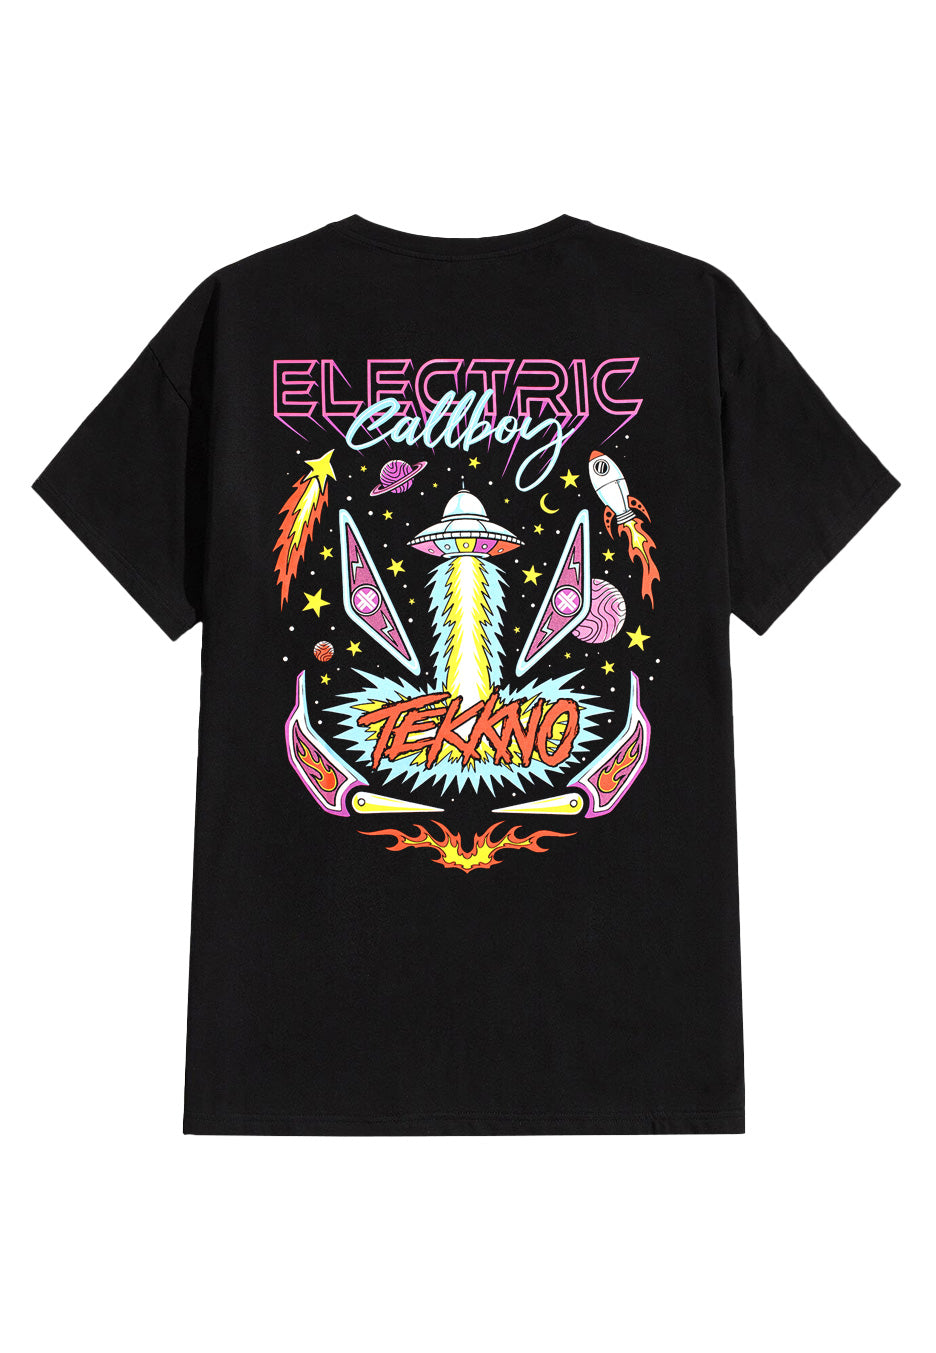 Electric Callboy - Tekkno Pinball - T-Shirt